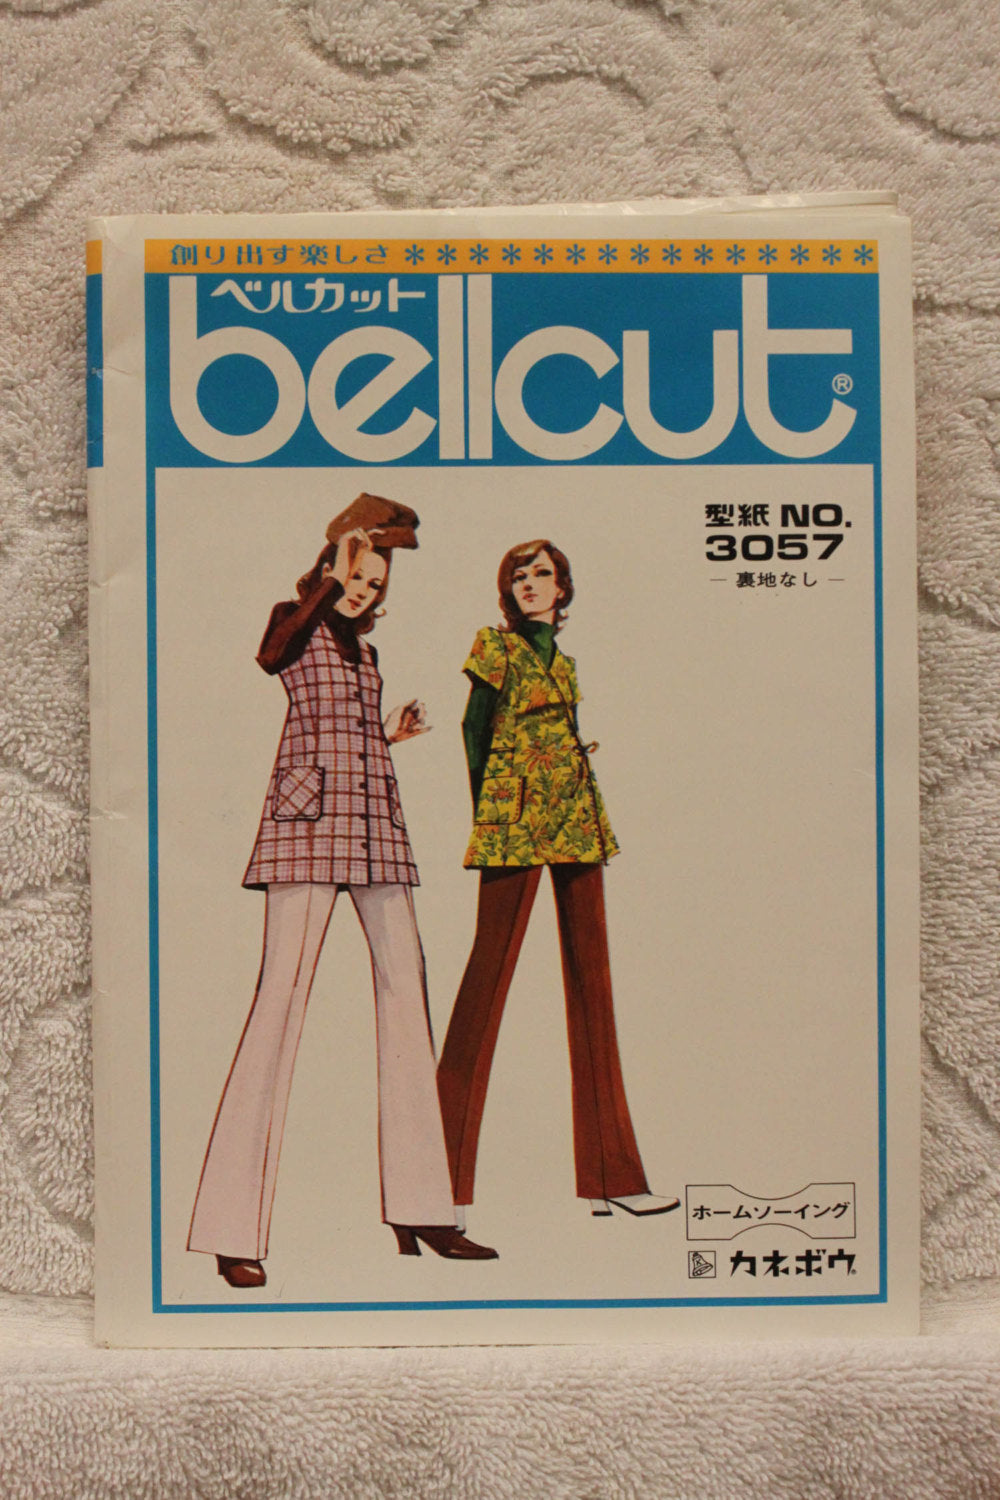 Vintage Sewing Pattern / Stovepipe Pants Pattern / Tunic Pattern / 1970s Pattern / Bellcut 3057 / Smock Pattern / Vintage Japanese Pattern